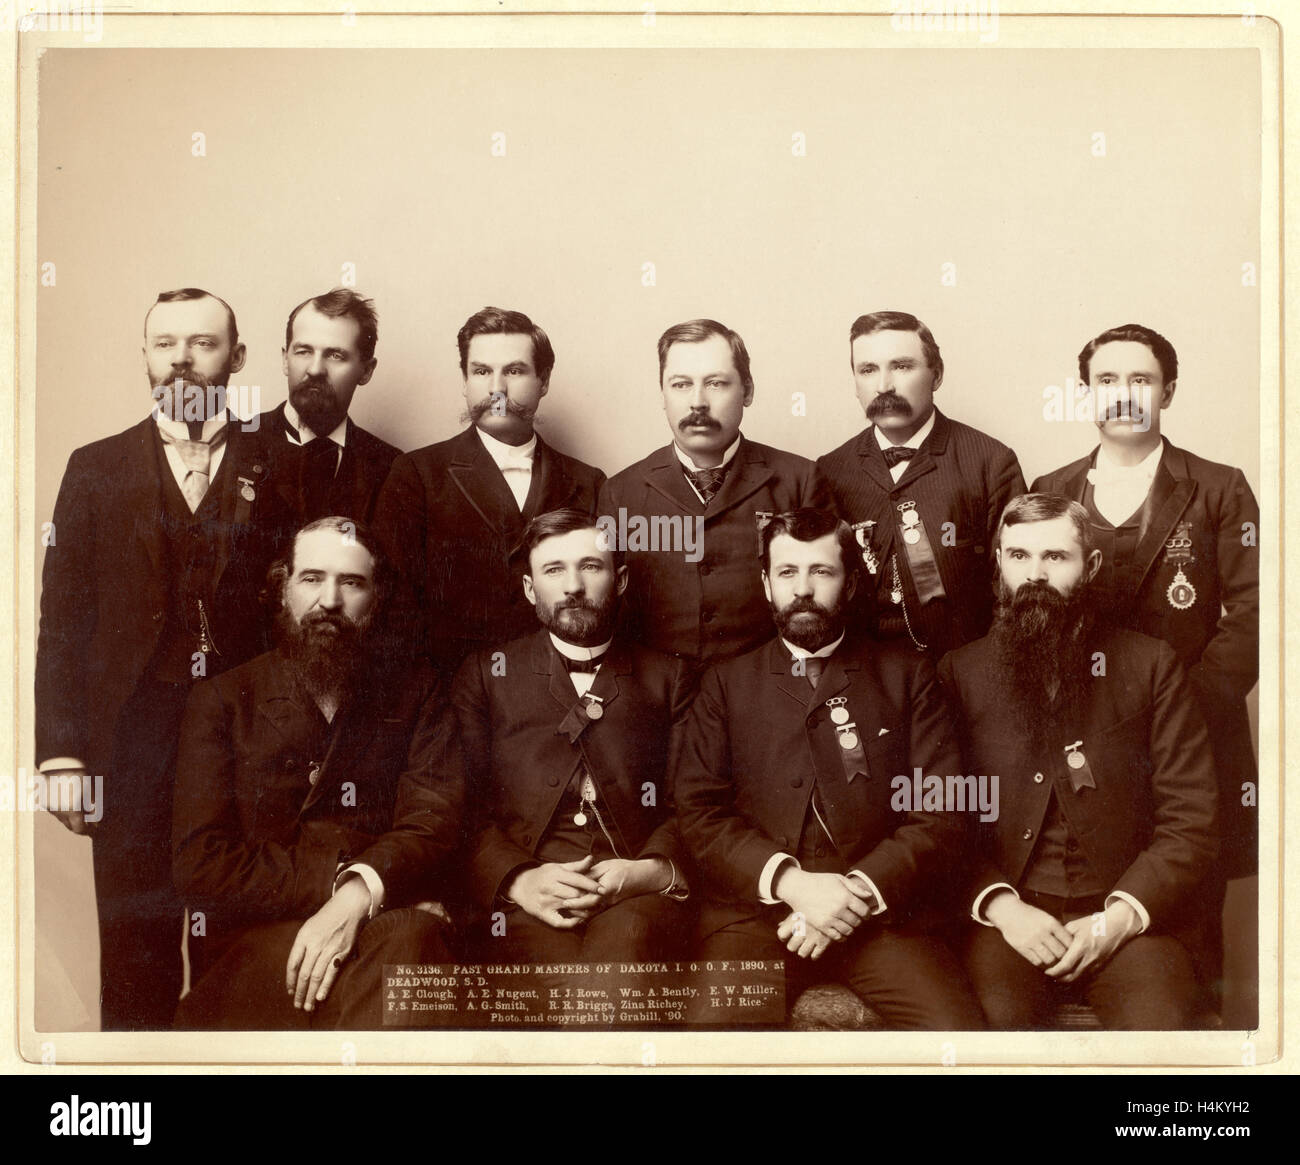 Past Grand Masters of Dakota I.O.O. F., 1890, at Deadwood, S.D. A.E. Clough, A.E.Nugent, H.J. Rowe, Wm. A. Bently, F.W. Miller Stock Photo